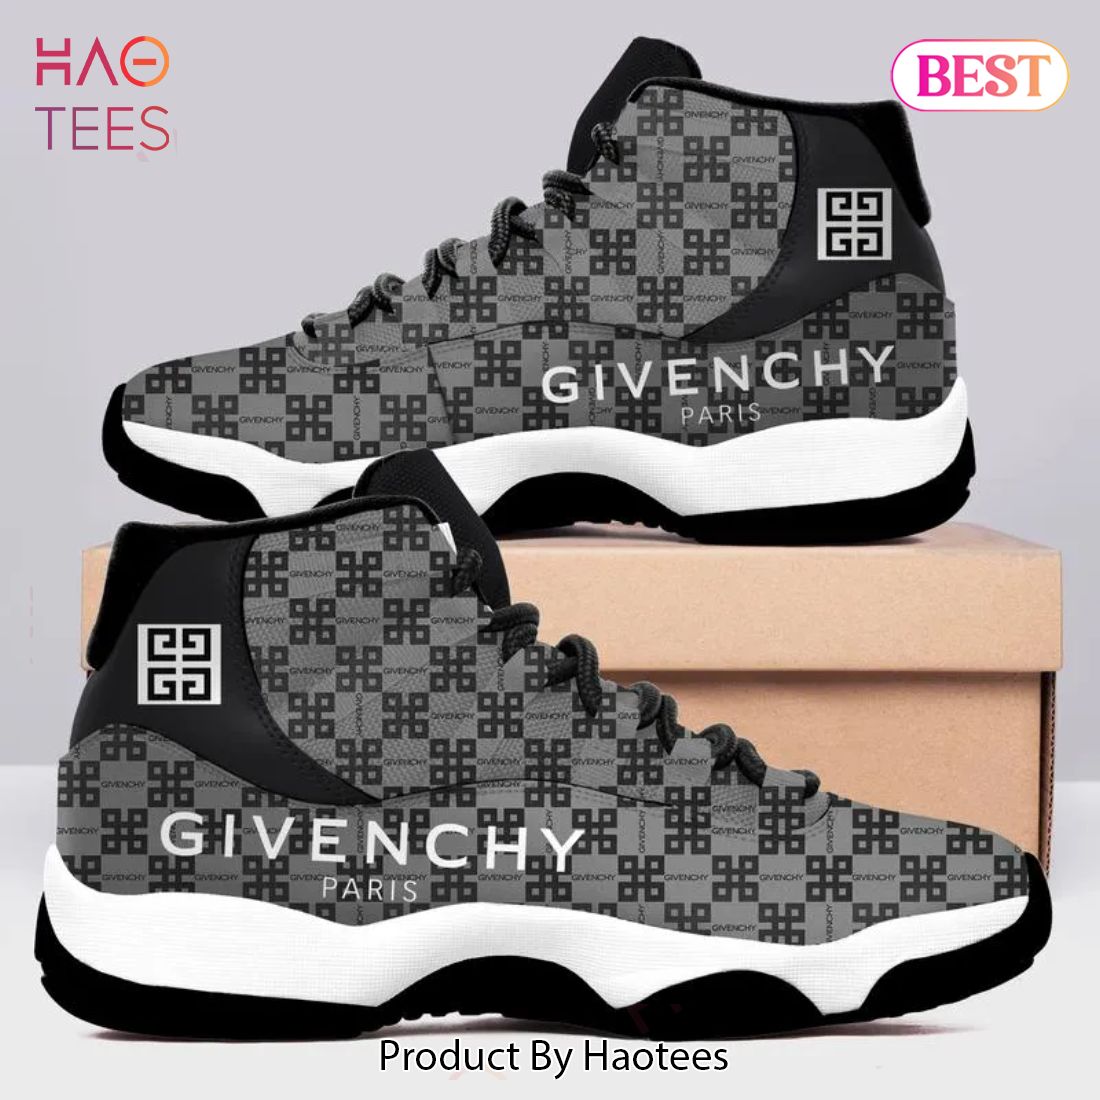 [NEW FASHION] Givenchy Paris Air Jordan 11 Sneakers Shoes Hot 2023 Gifts For Men Women